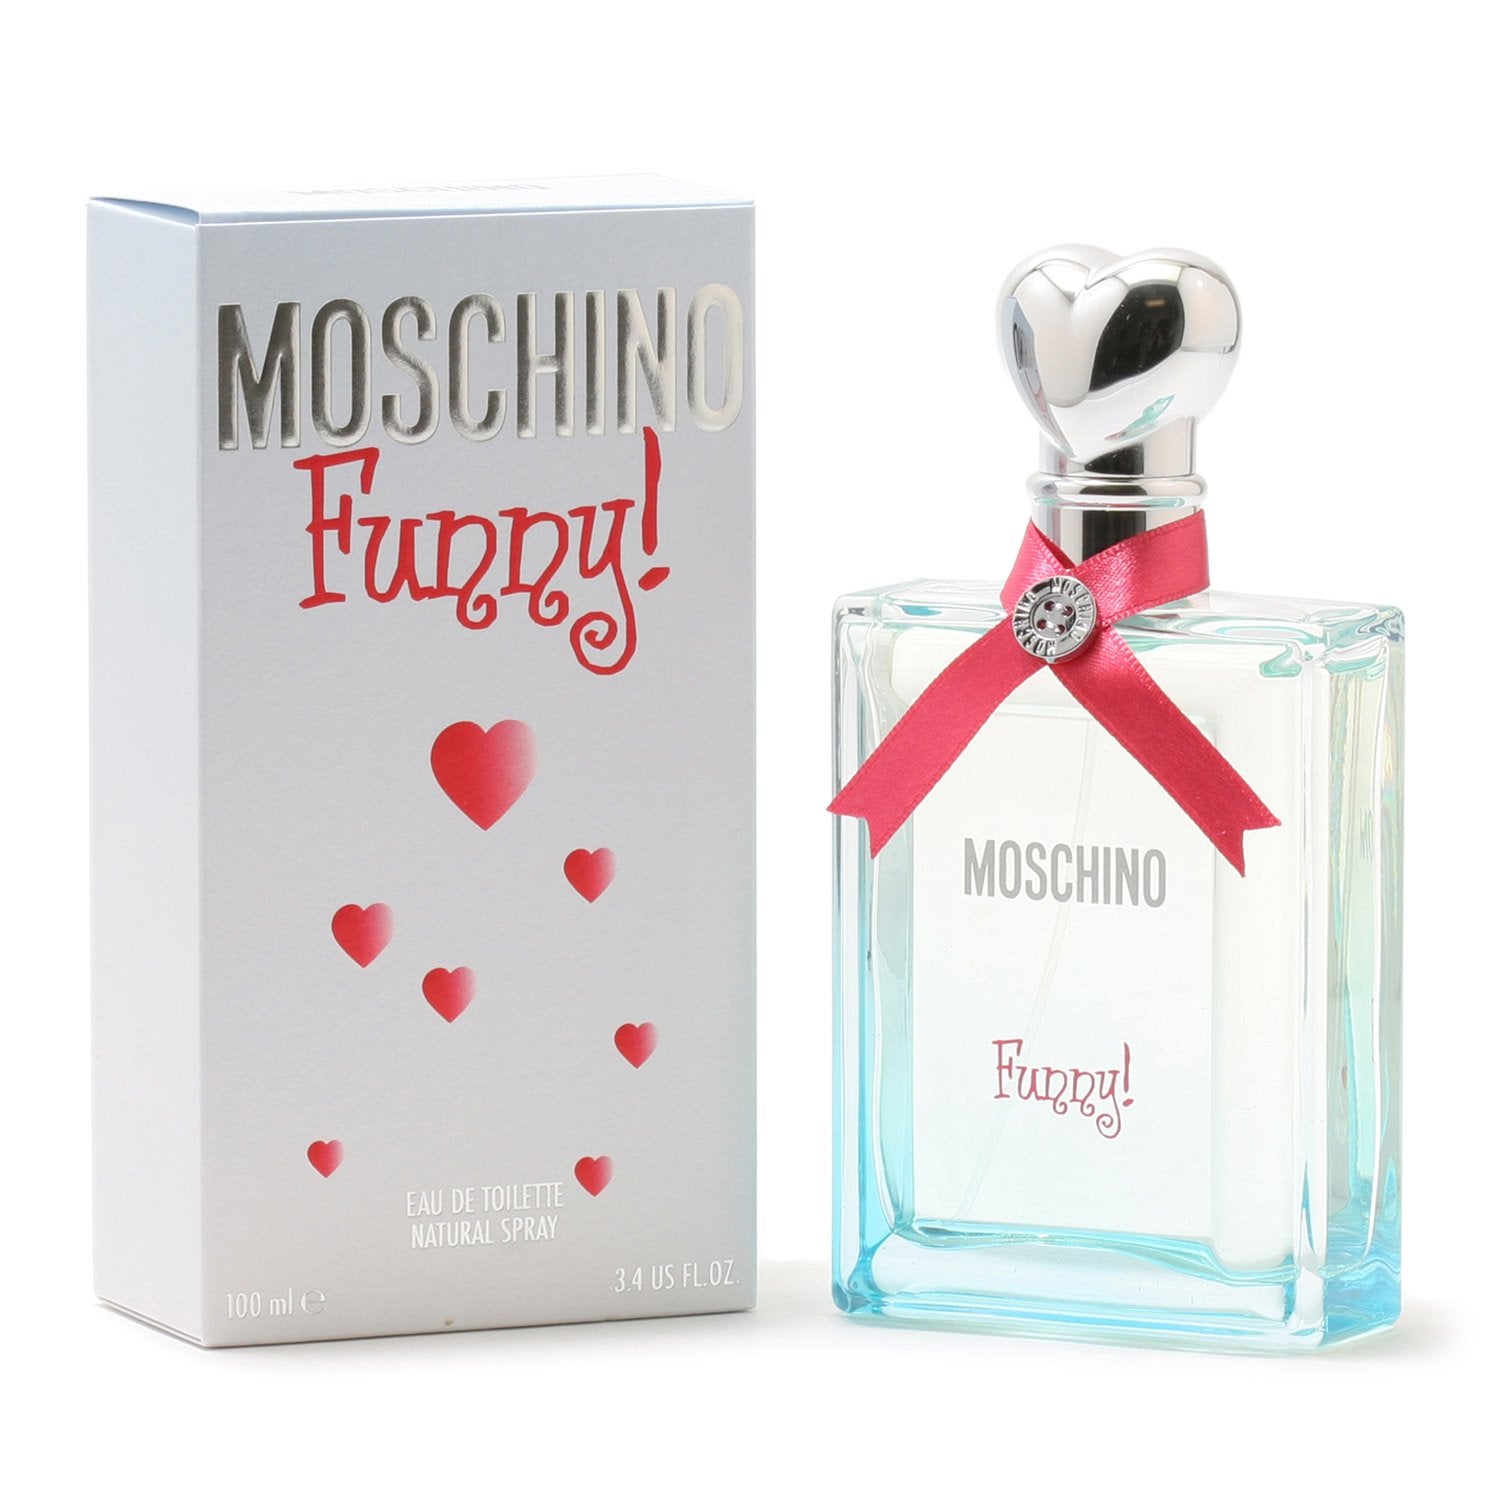 Perfume - MOSCHINO FUNNY FOR WOMEN - EAU DE TOILETTE SPRAY, 3.4 OZ